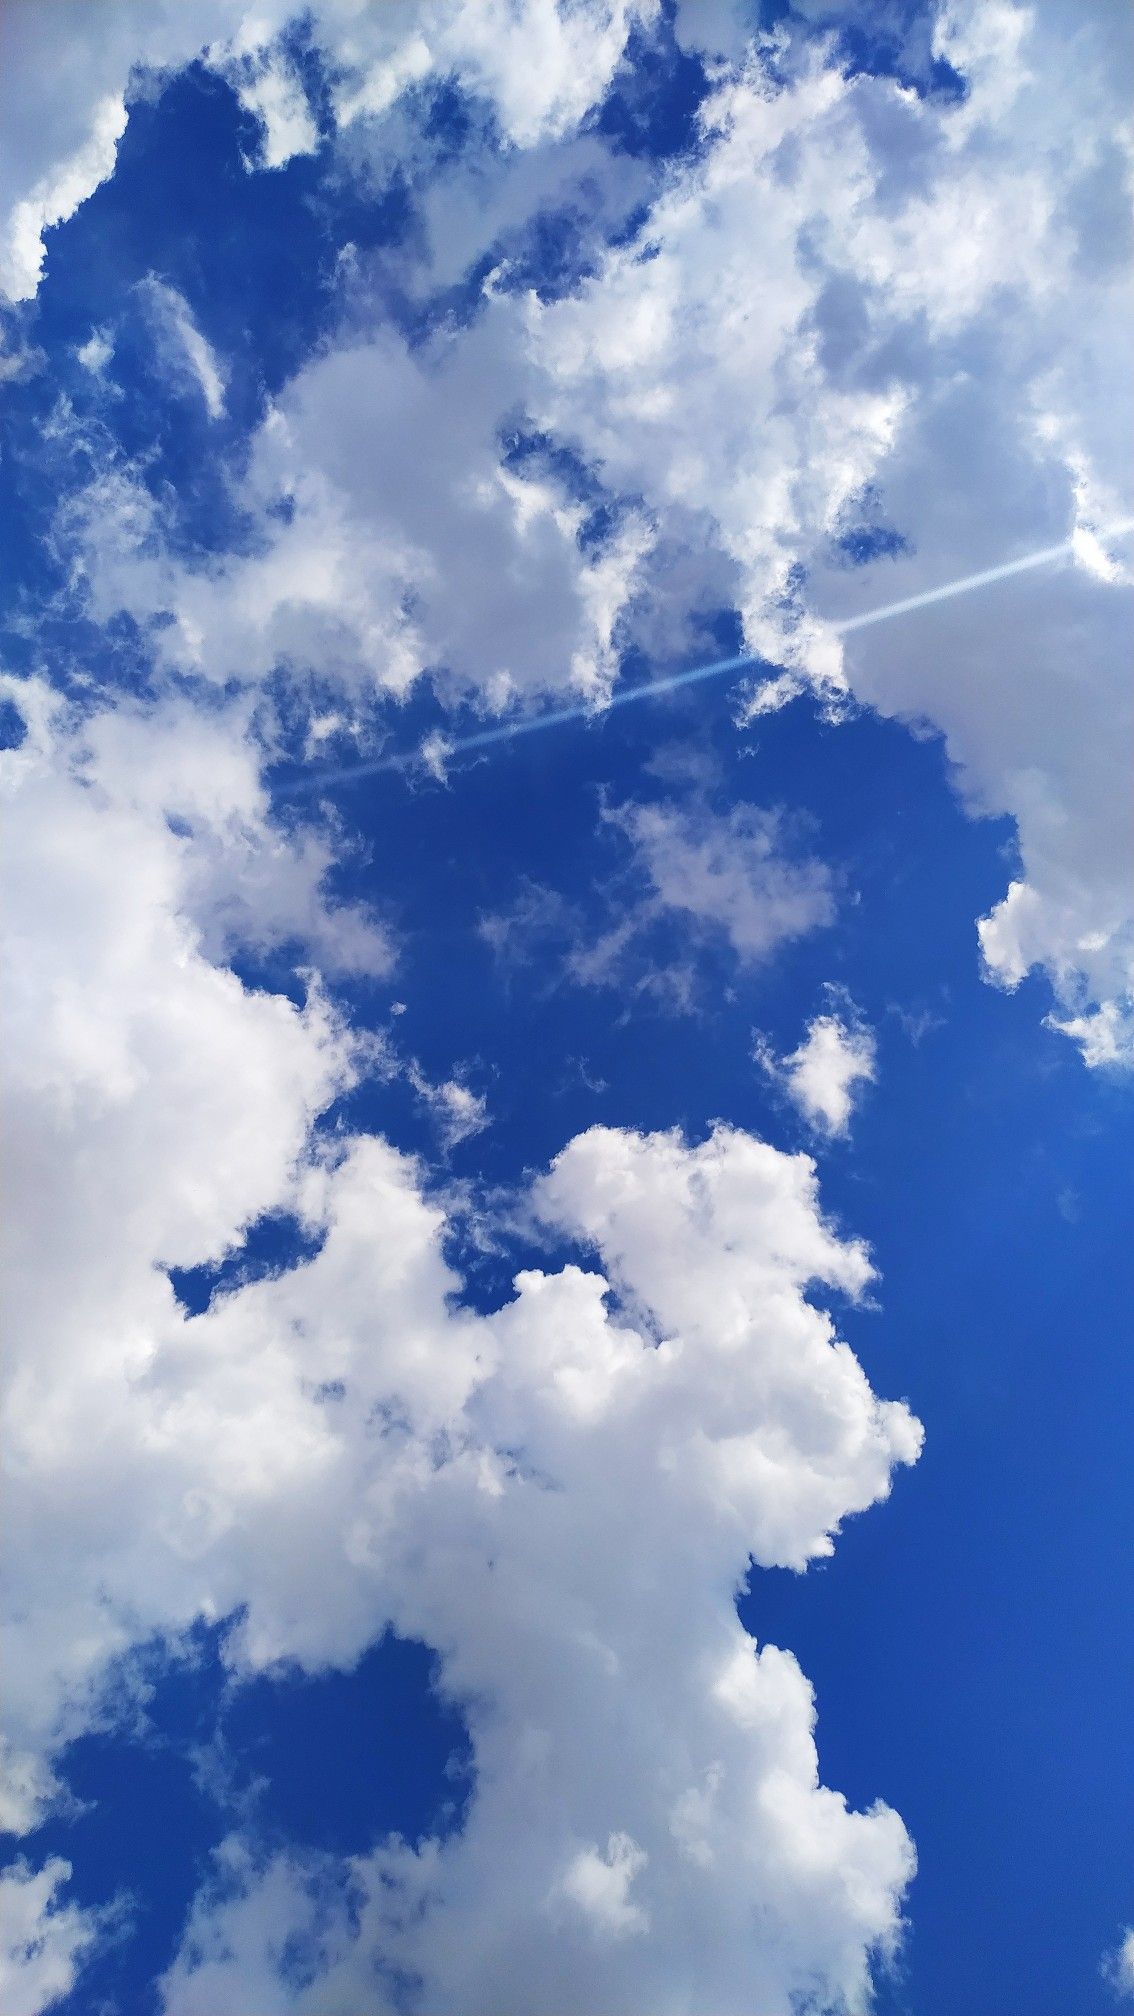 8183269 Blue Clouds Backgrounds Images Stock Photos  Vectors   Shutterstock